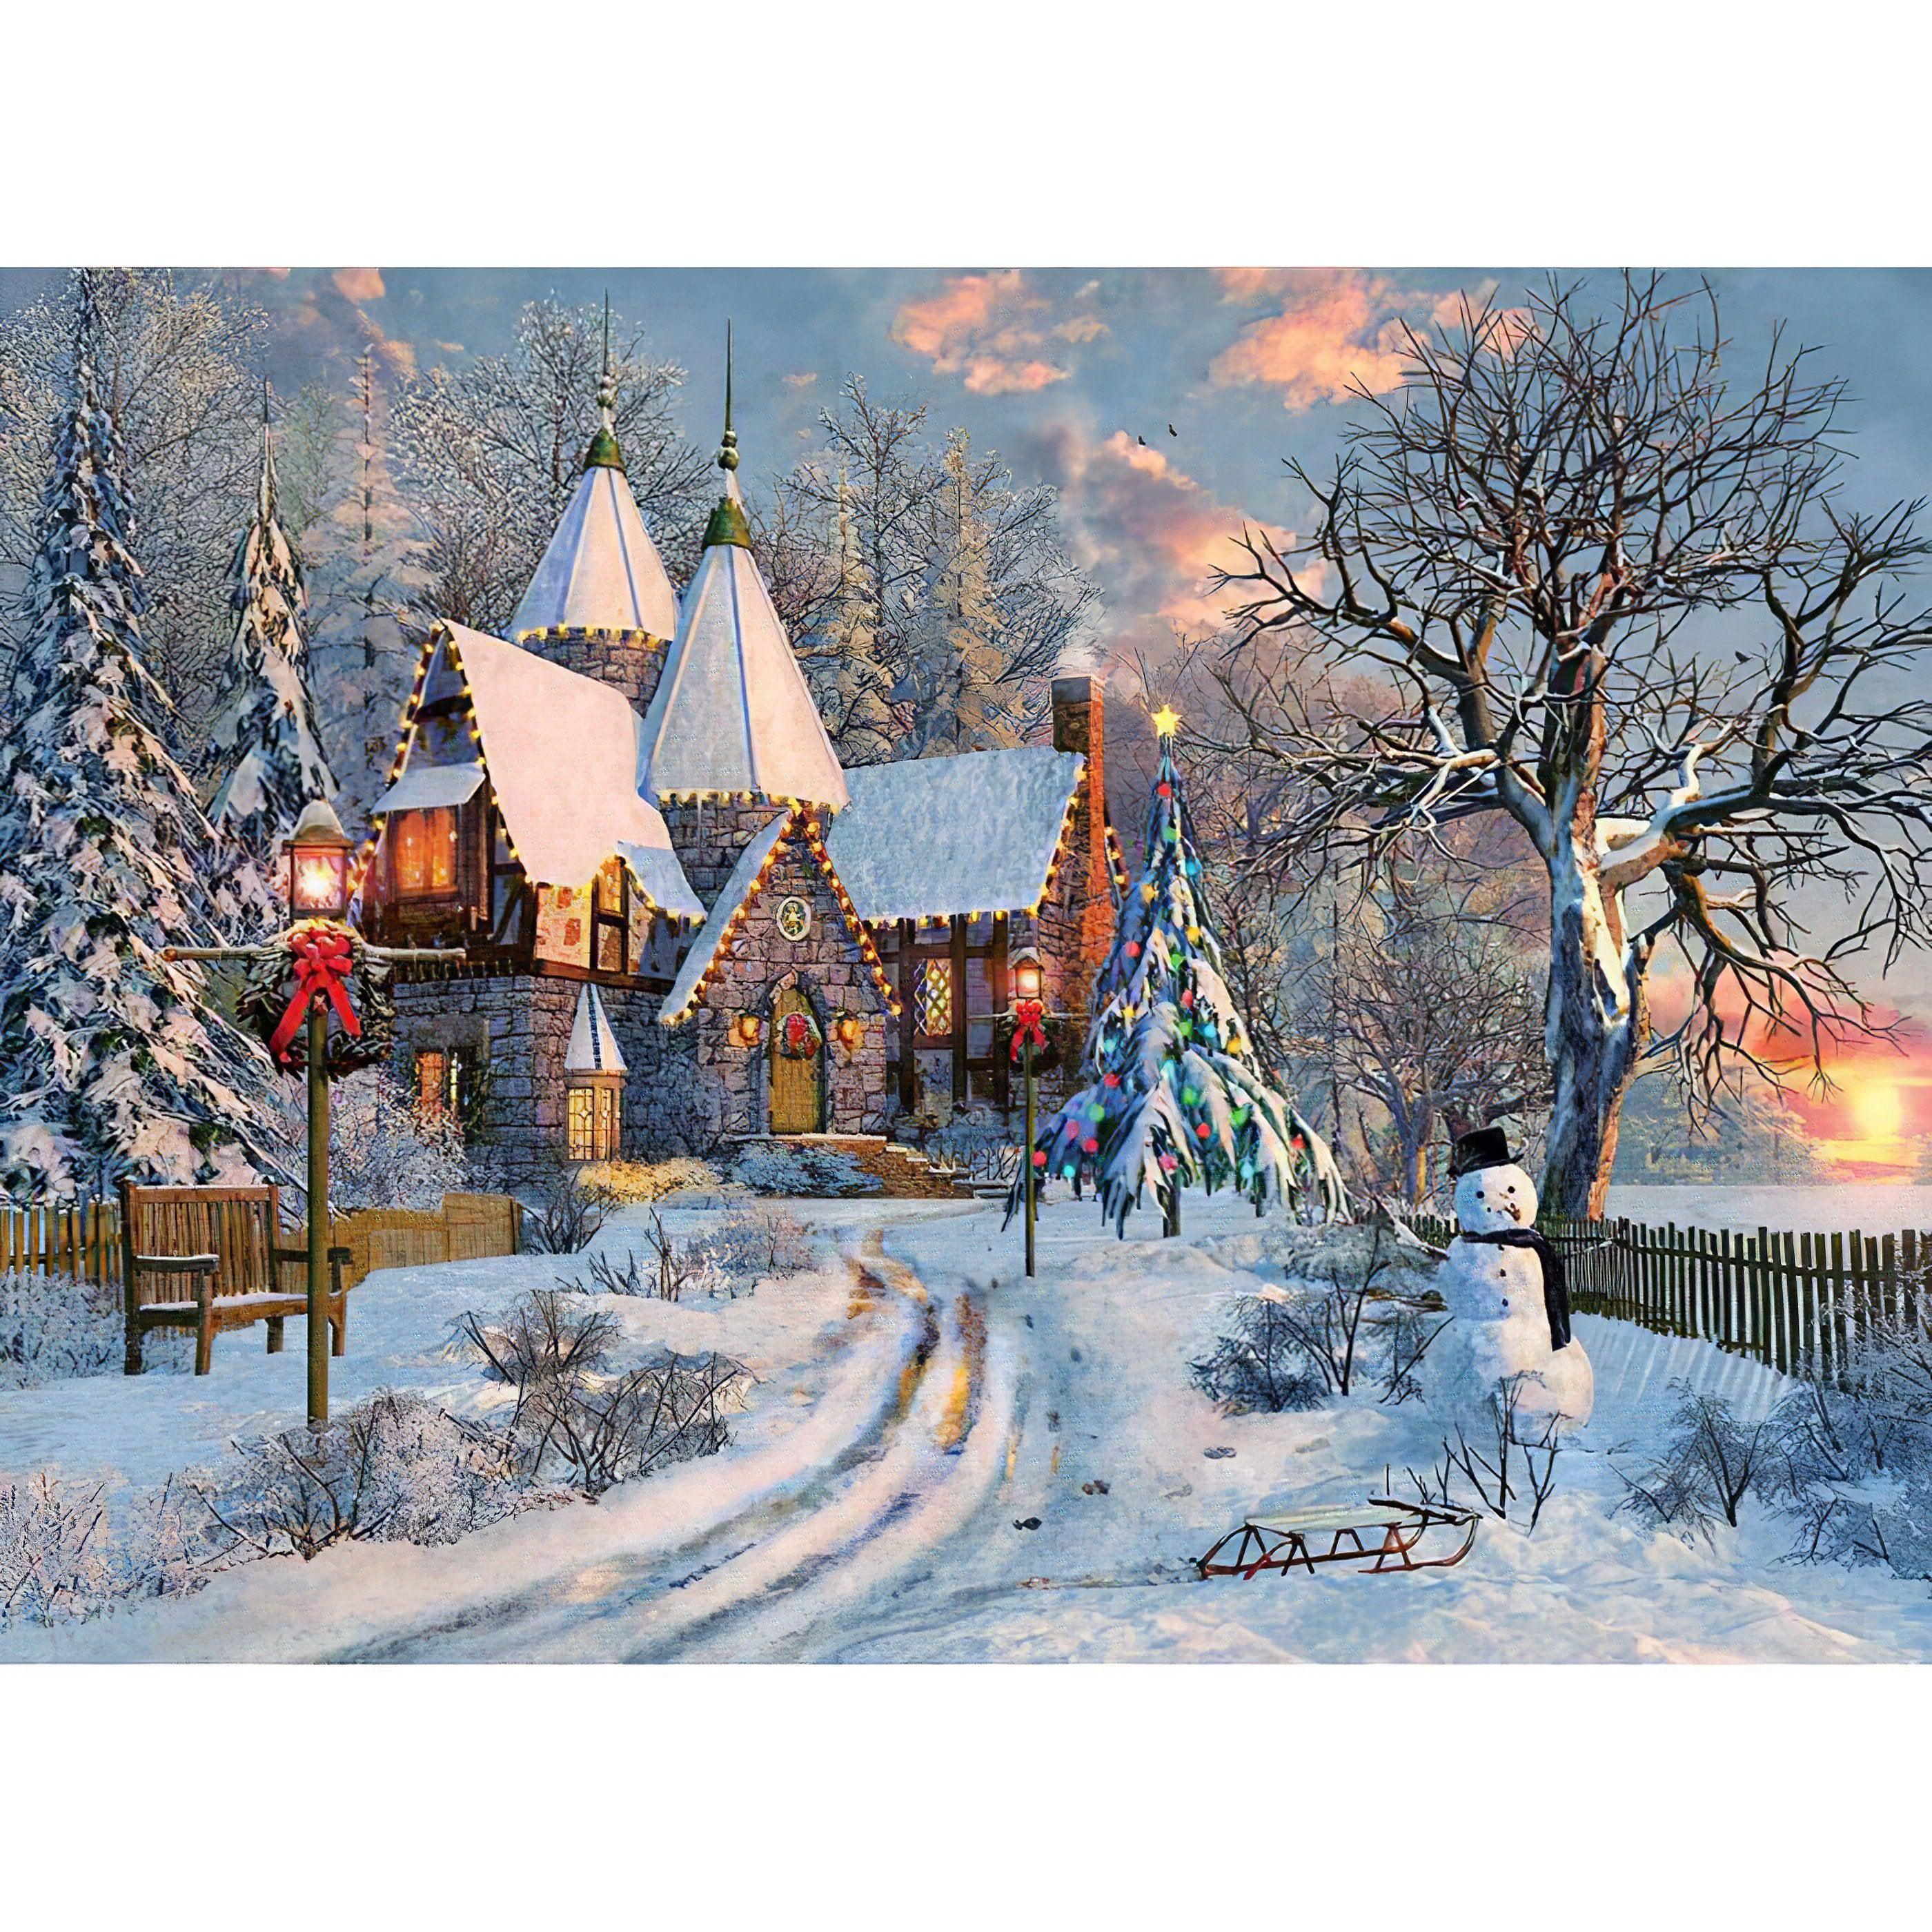 Snowy Rustic House Christmas